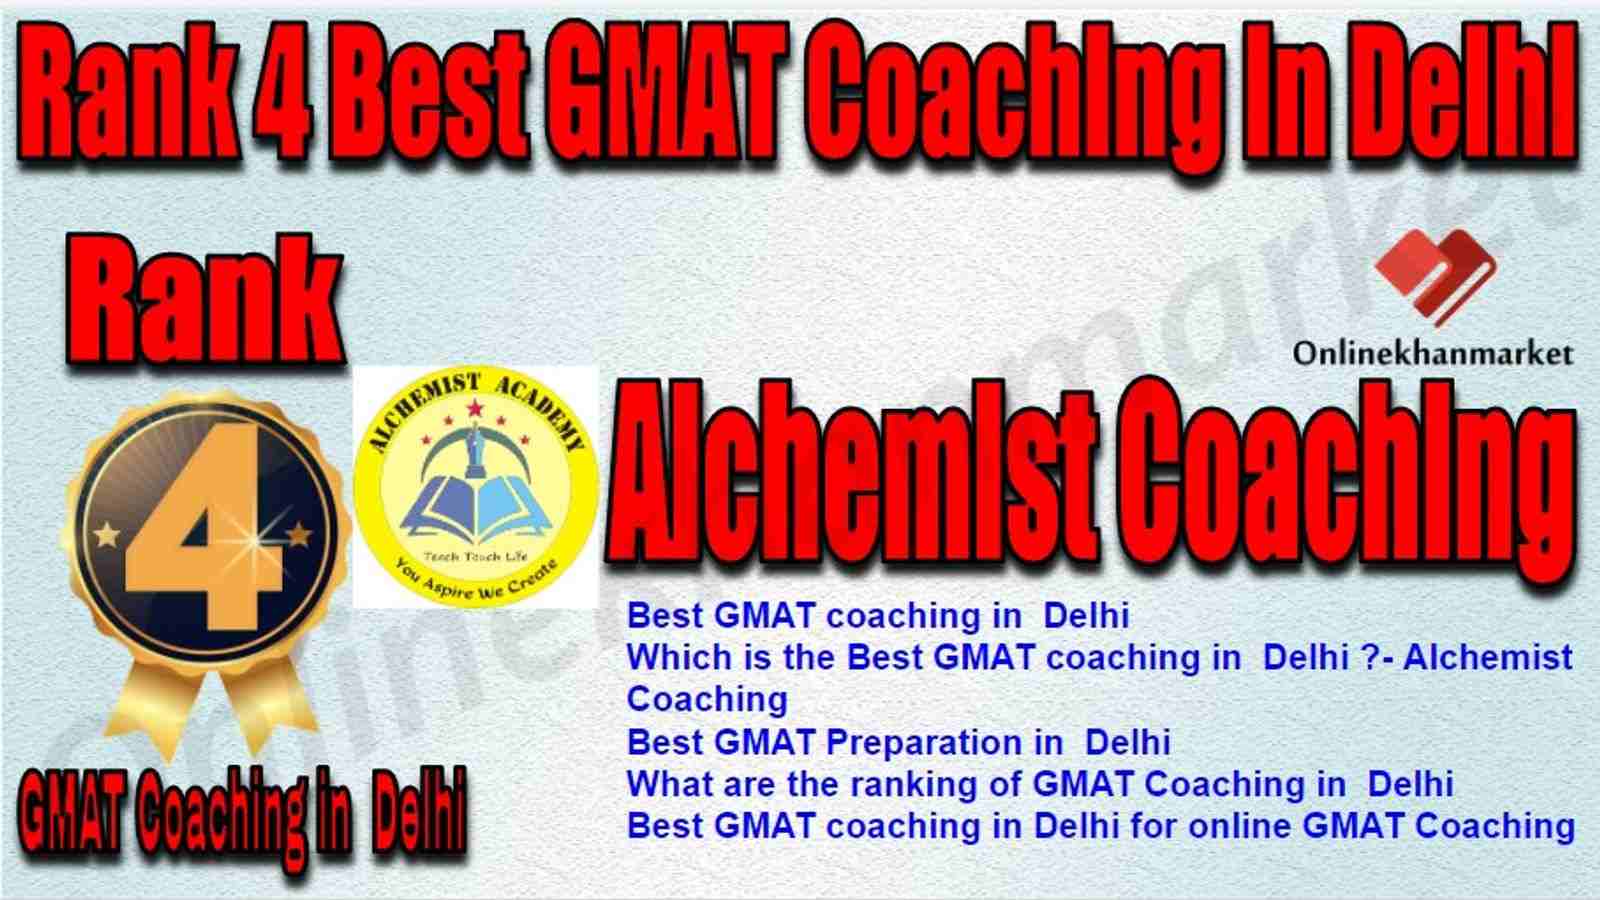 Rank 4 Best GMAT Coaching in Delhi